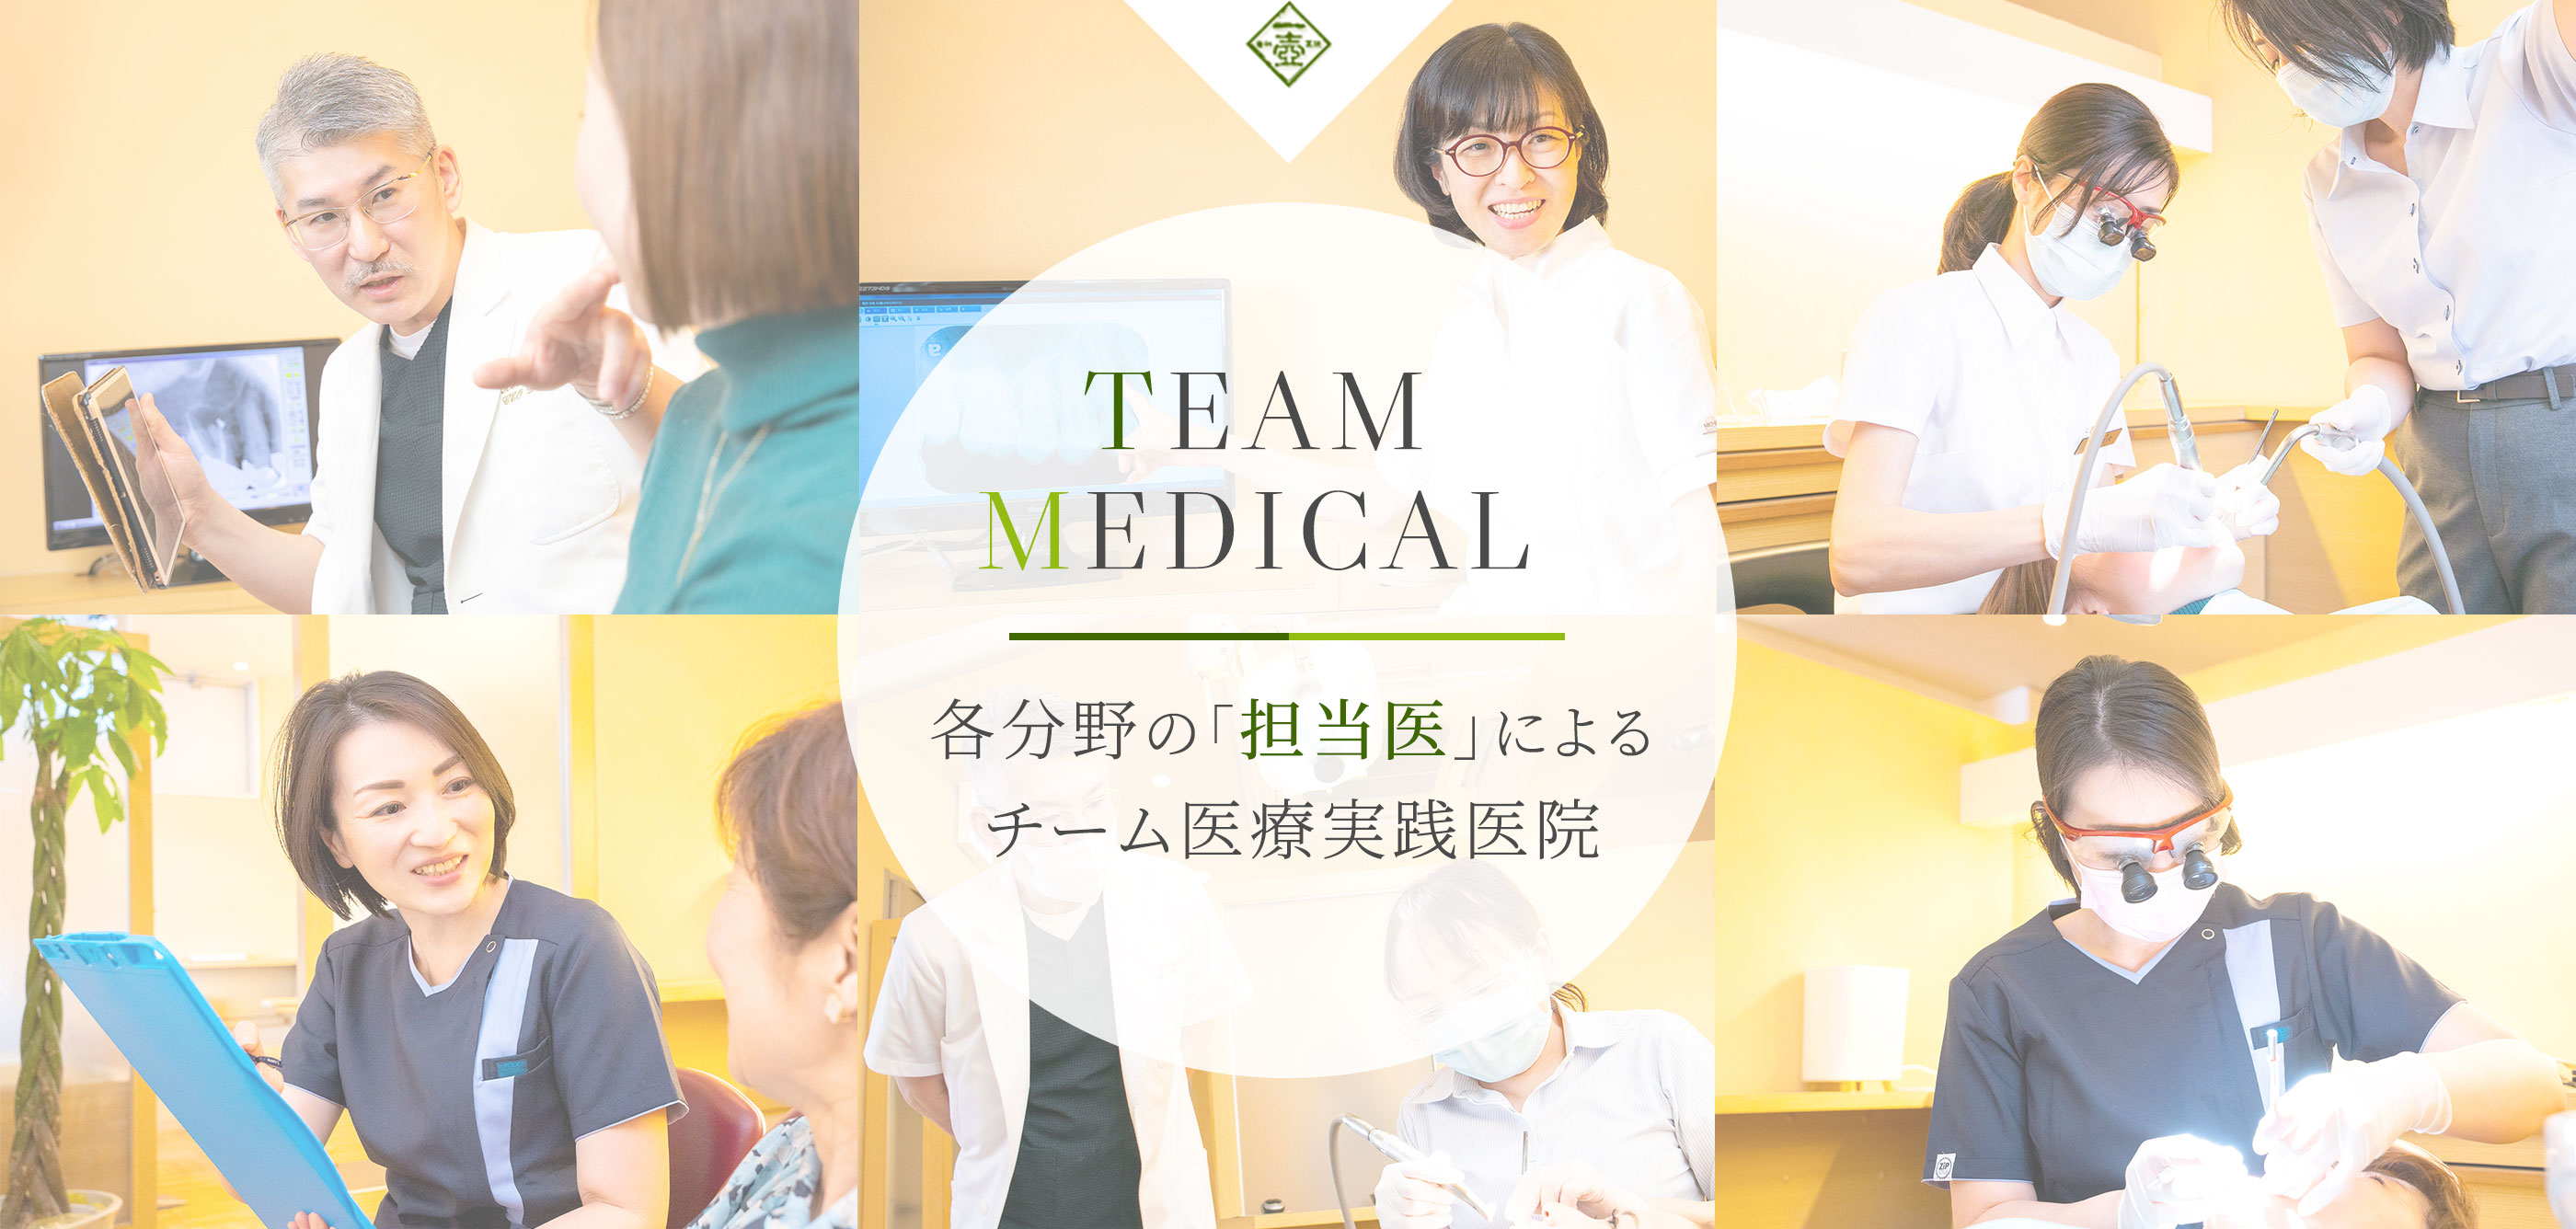 TEAM MEDICAL 各分野の「担当医」によるチーム医療実践医院